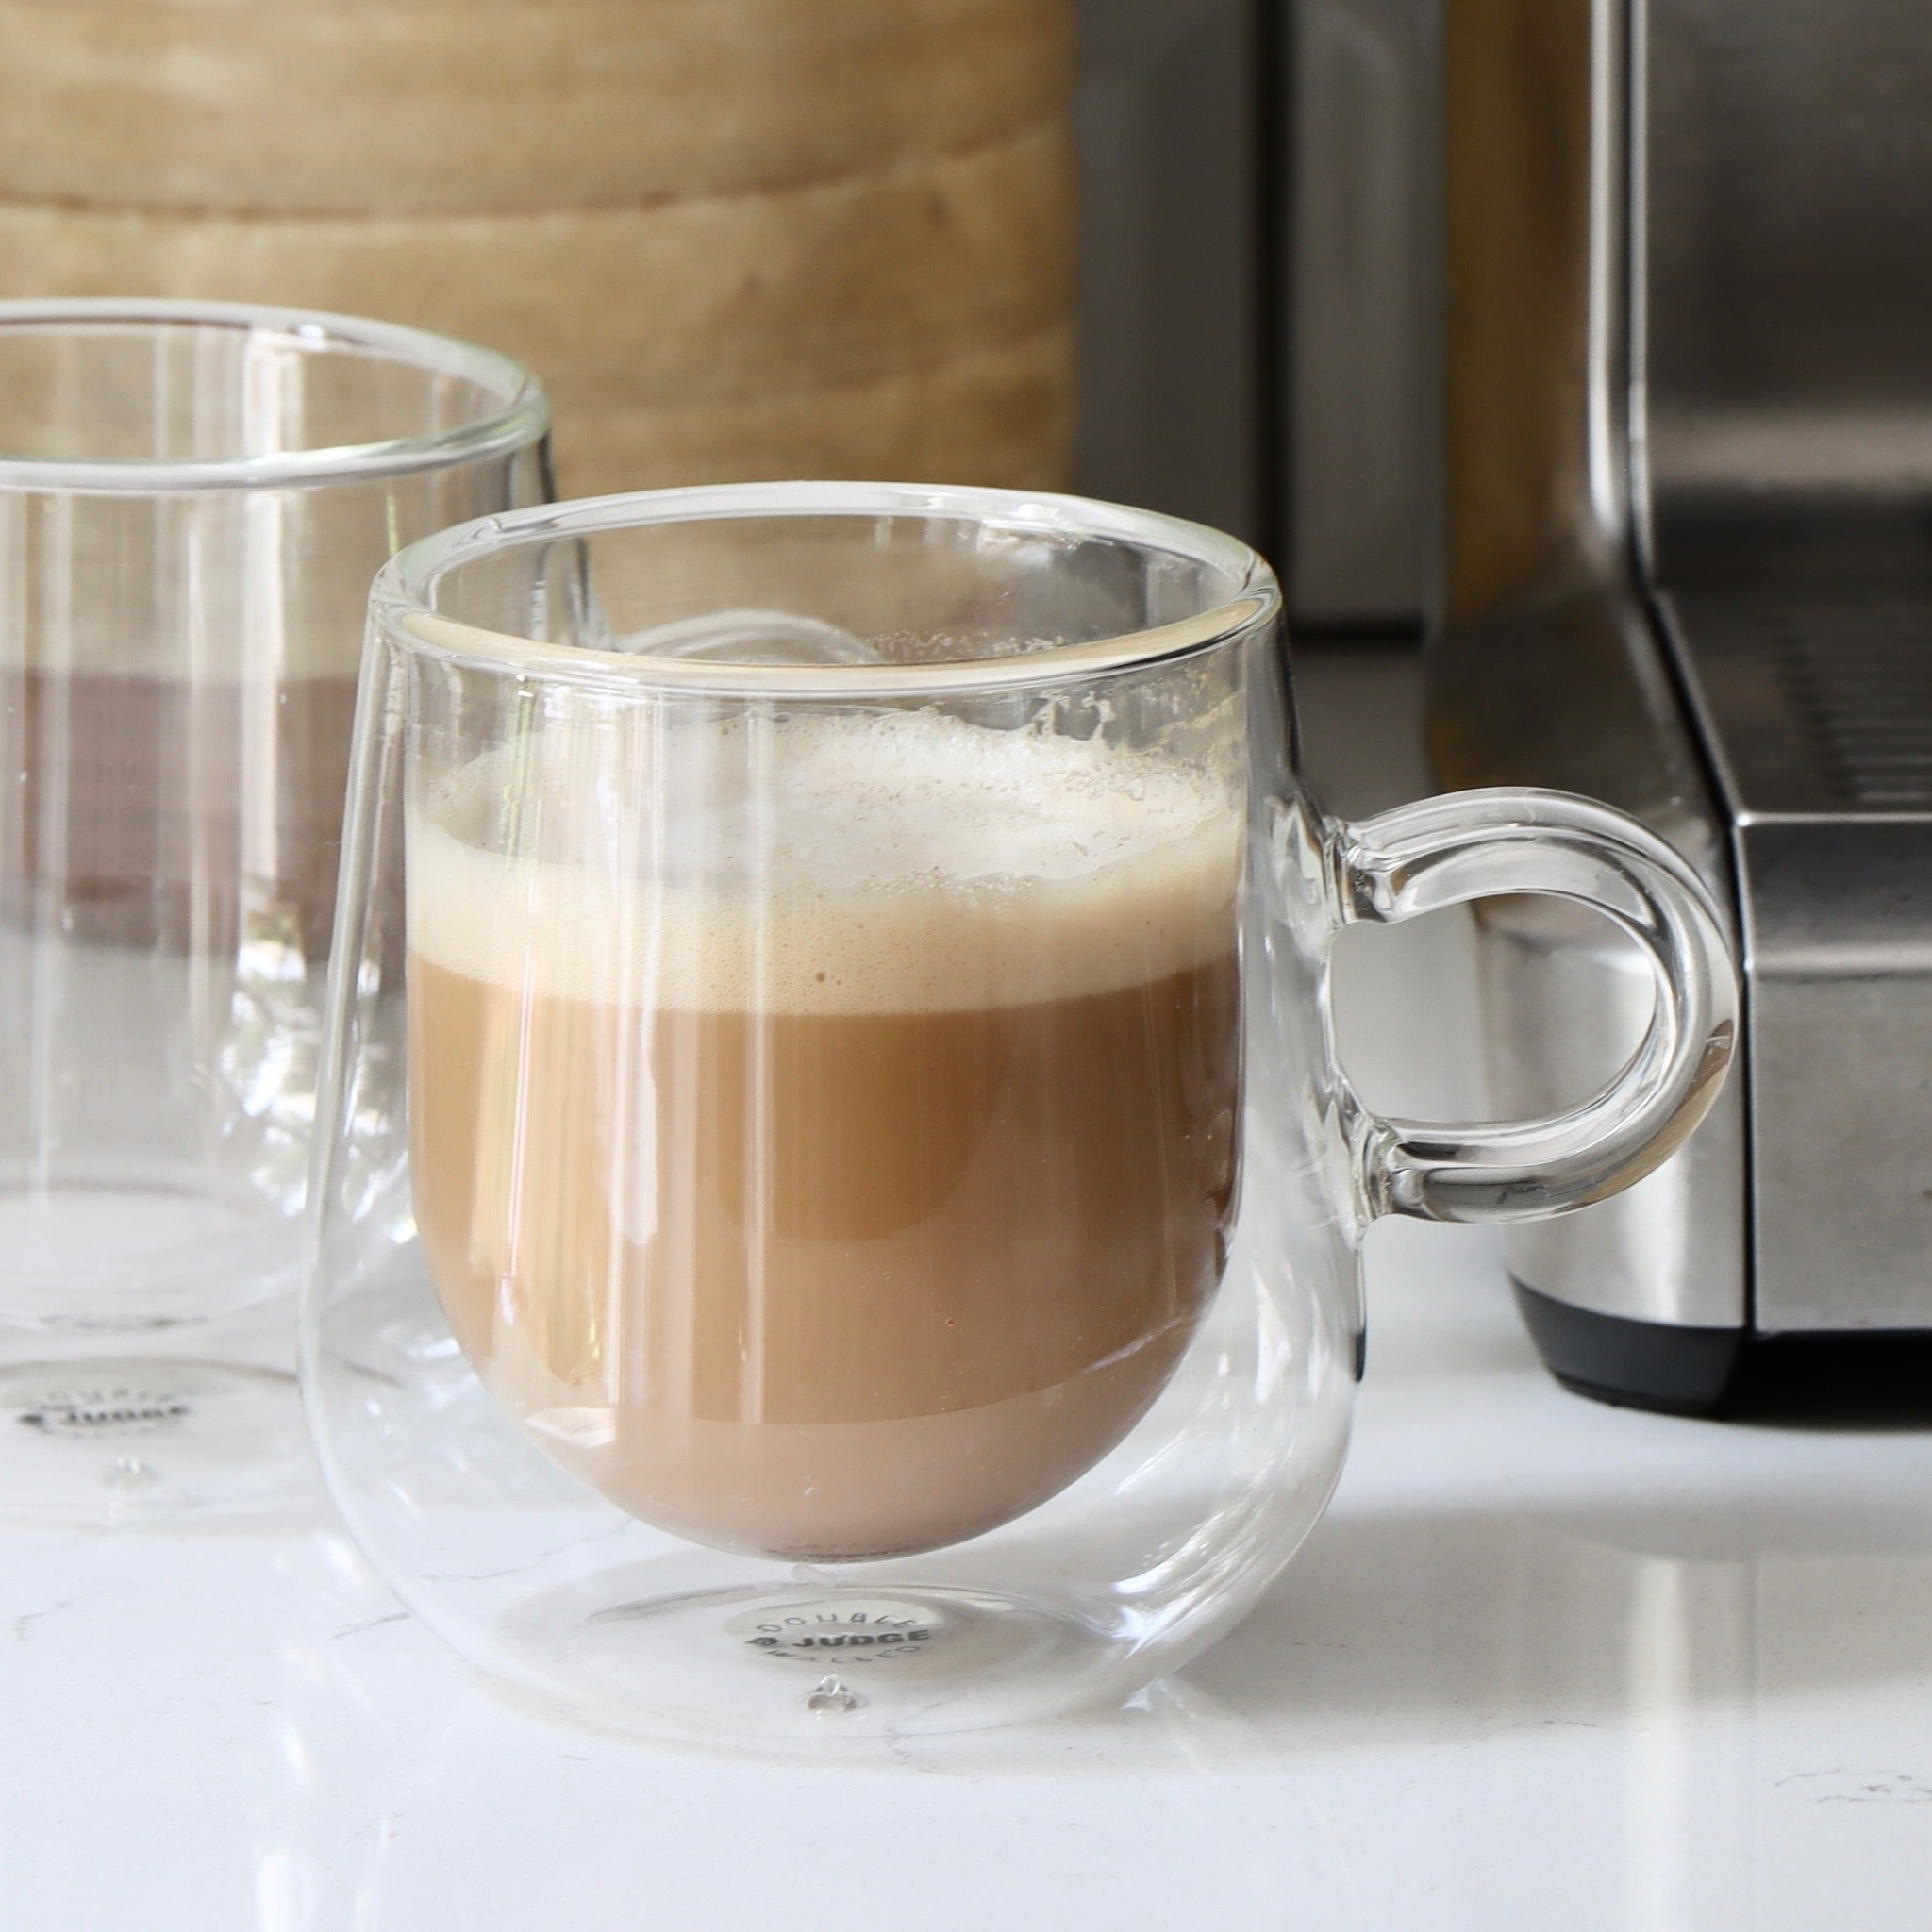 Double Walled Glass Latte Mug - Set of 2